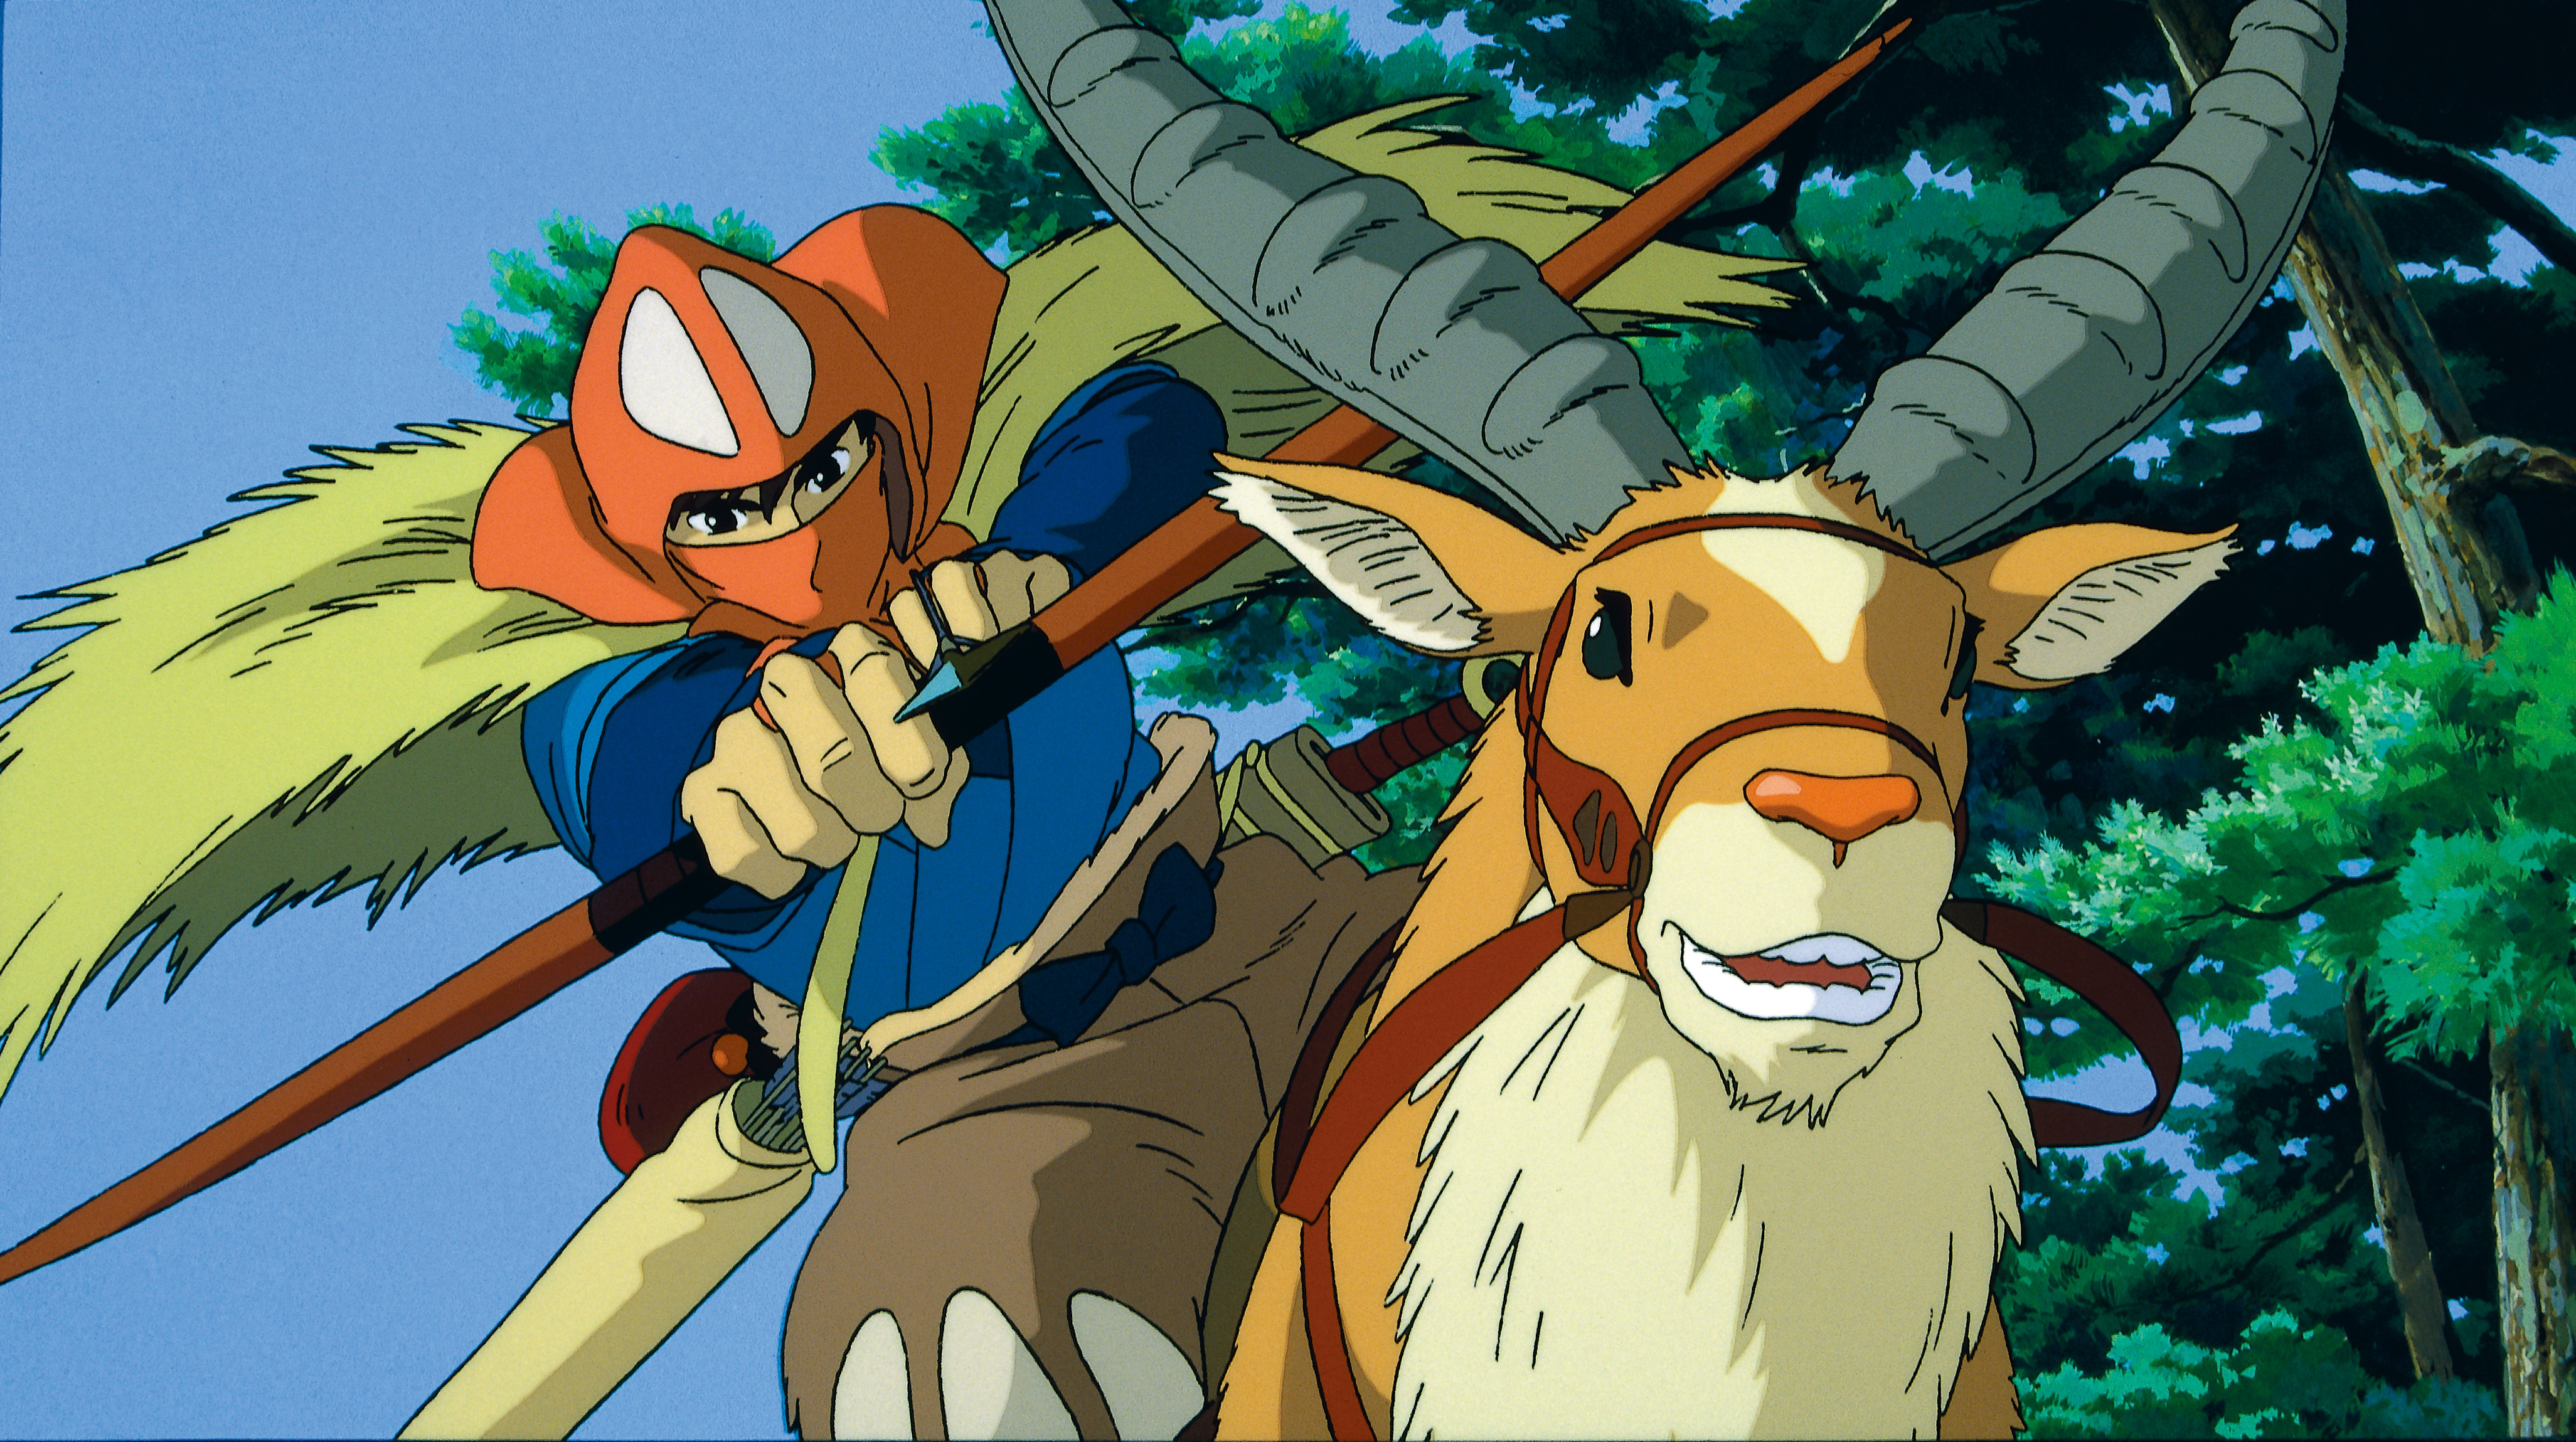 Prince Ashitaka rides his elk horse thing in Princess Mononoke